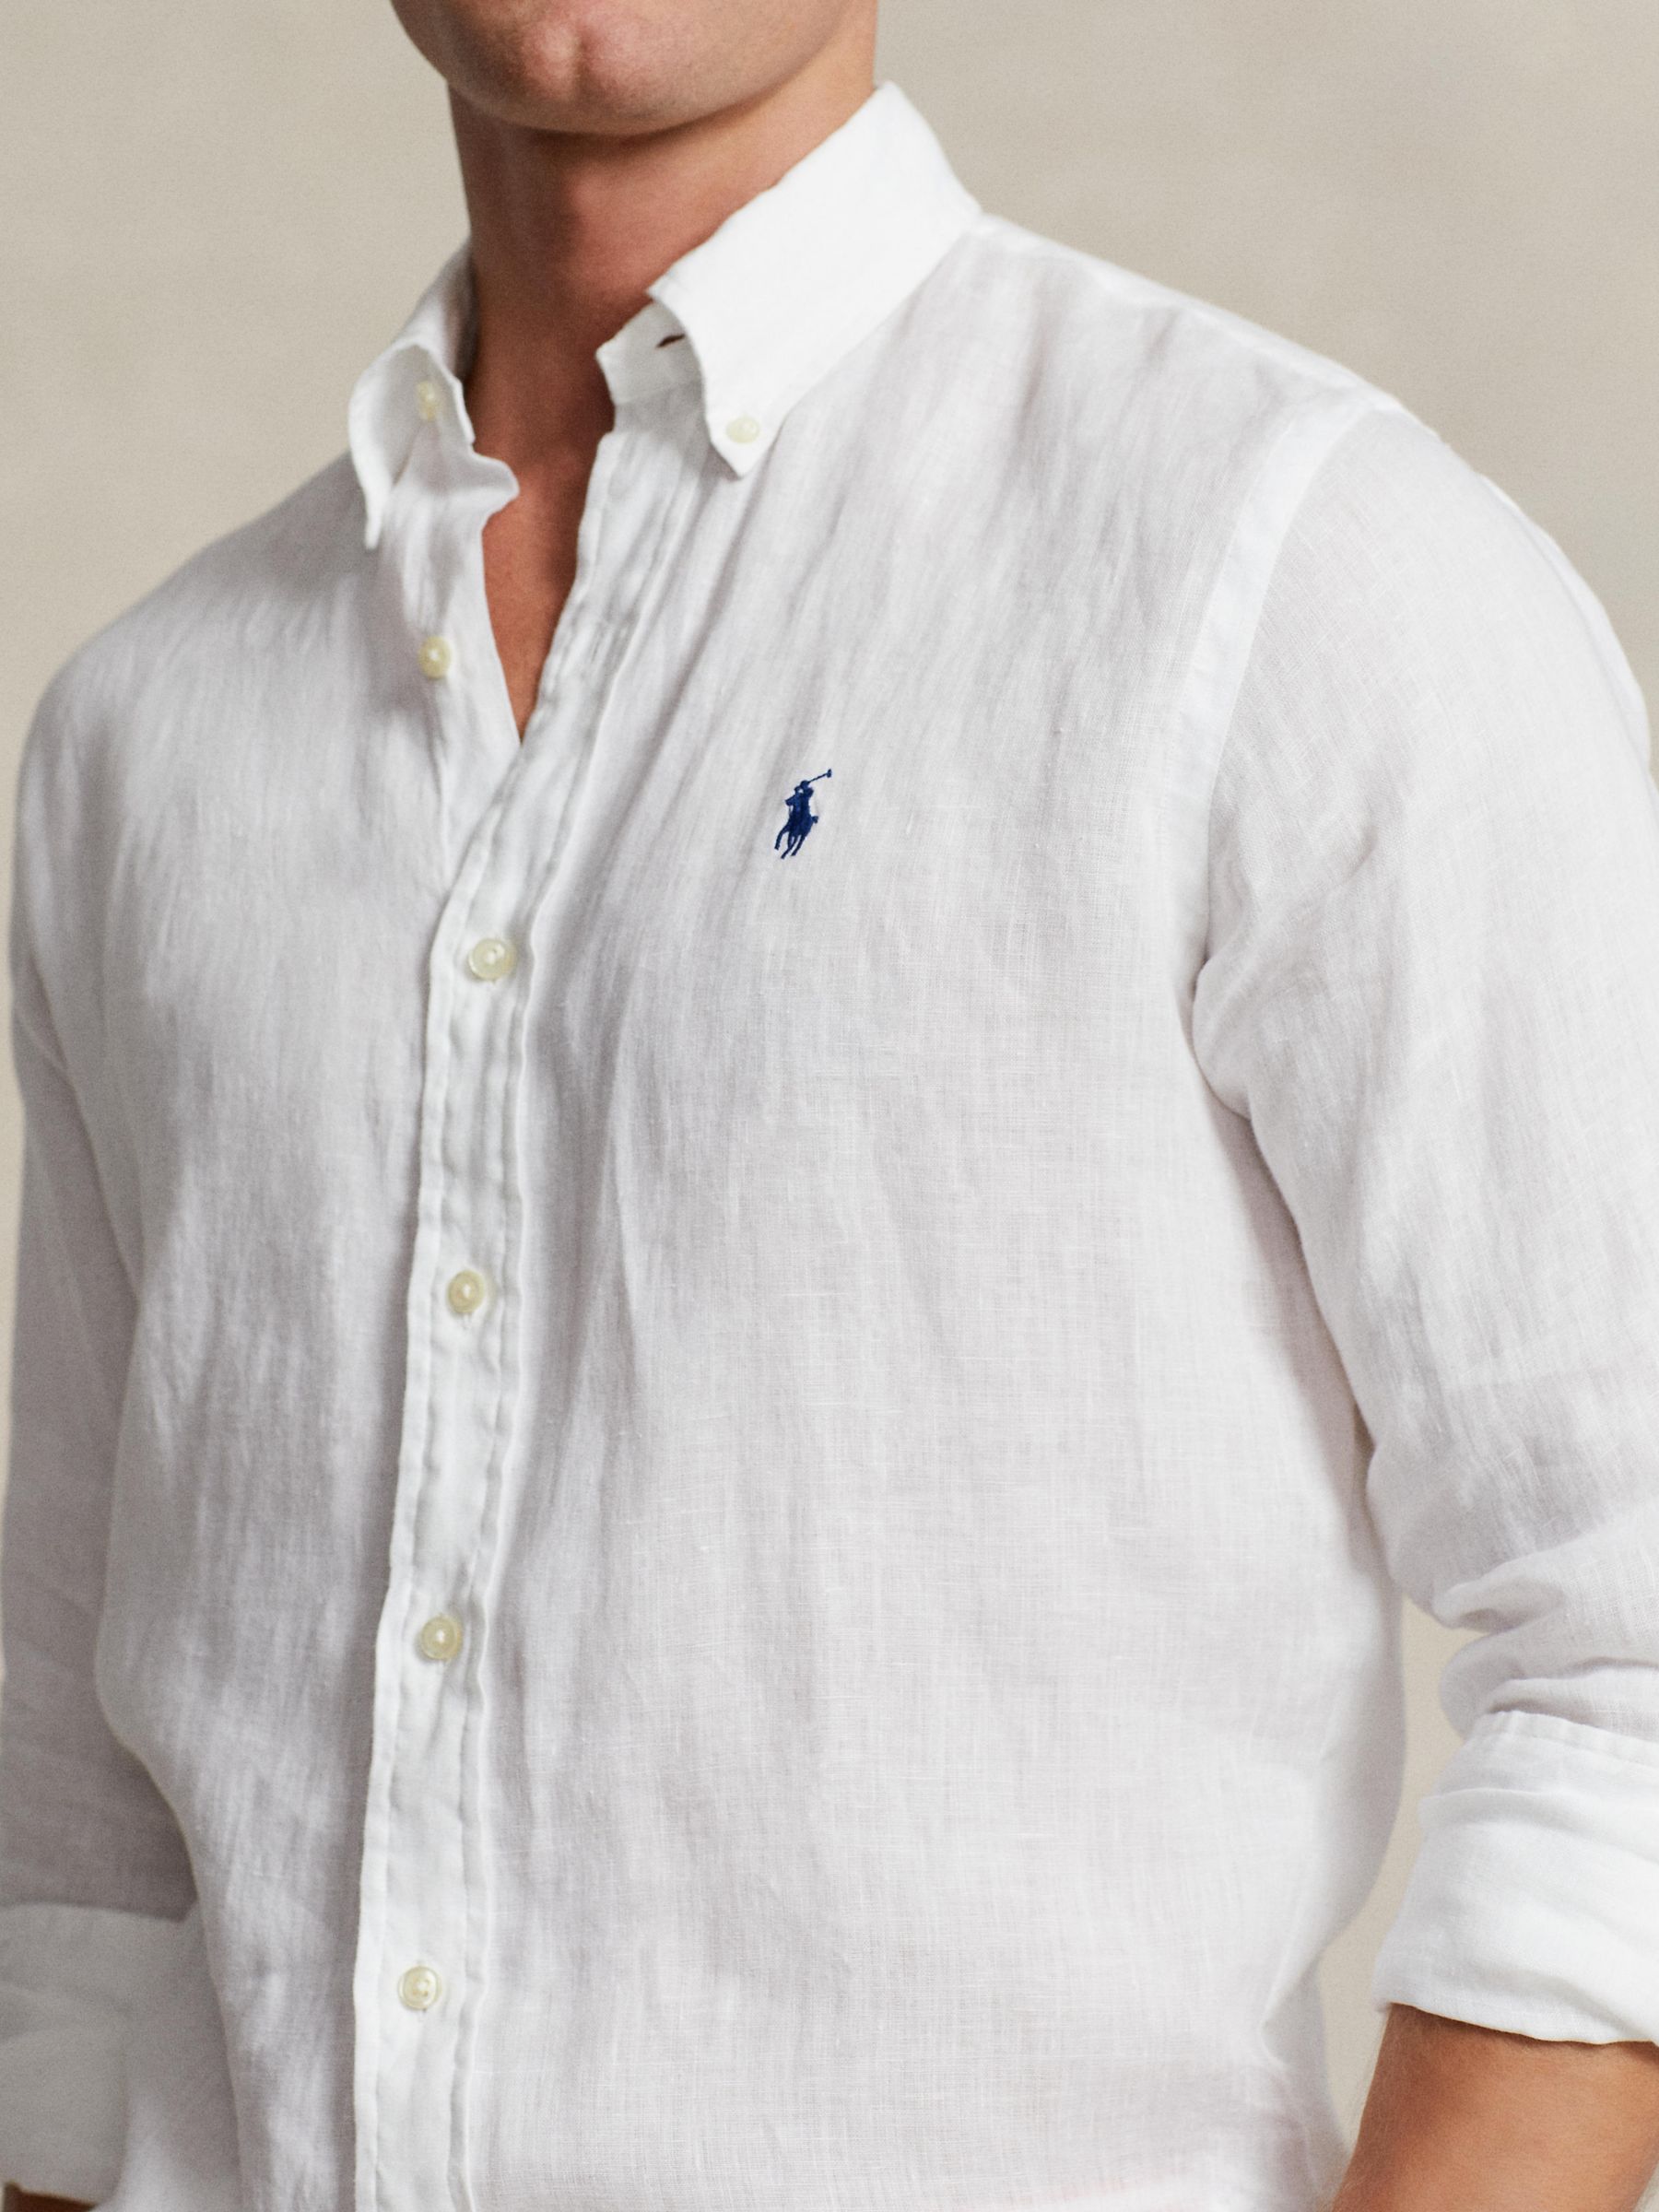 Ralph Lauren Custom Fit Linen Shirt, White, S